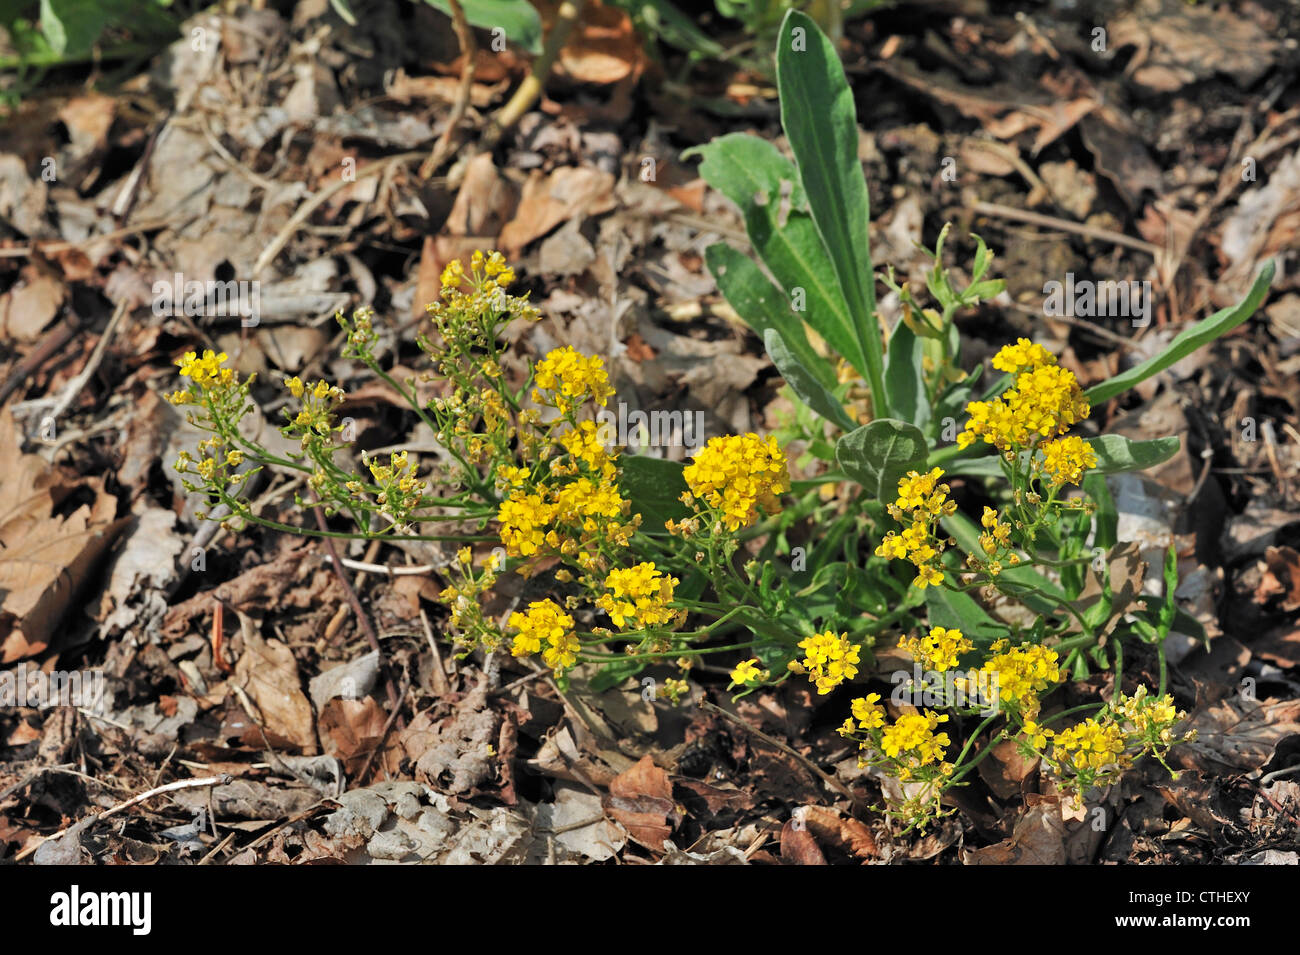 Gold Alyssum / Basket of Gold / Gold Dust / Goldentuft alyssum / Rock madwort (Alyssum saxatile / Aurinia saxatilis) in flower Stock Photo